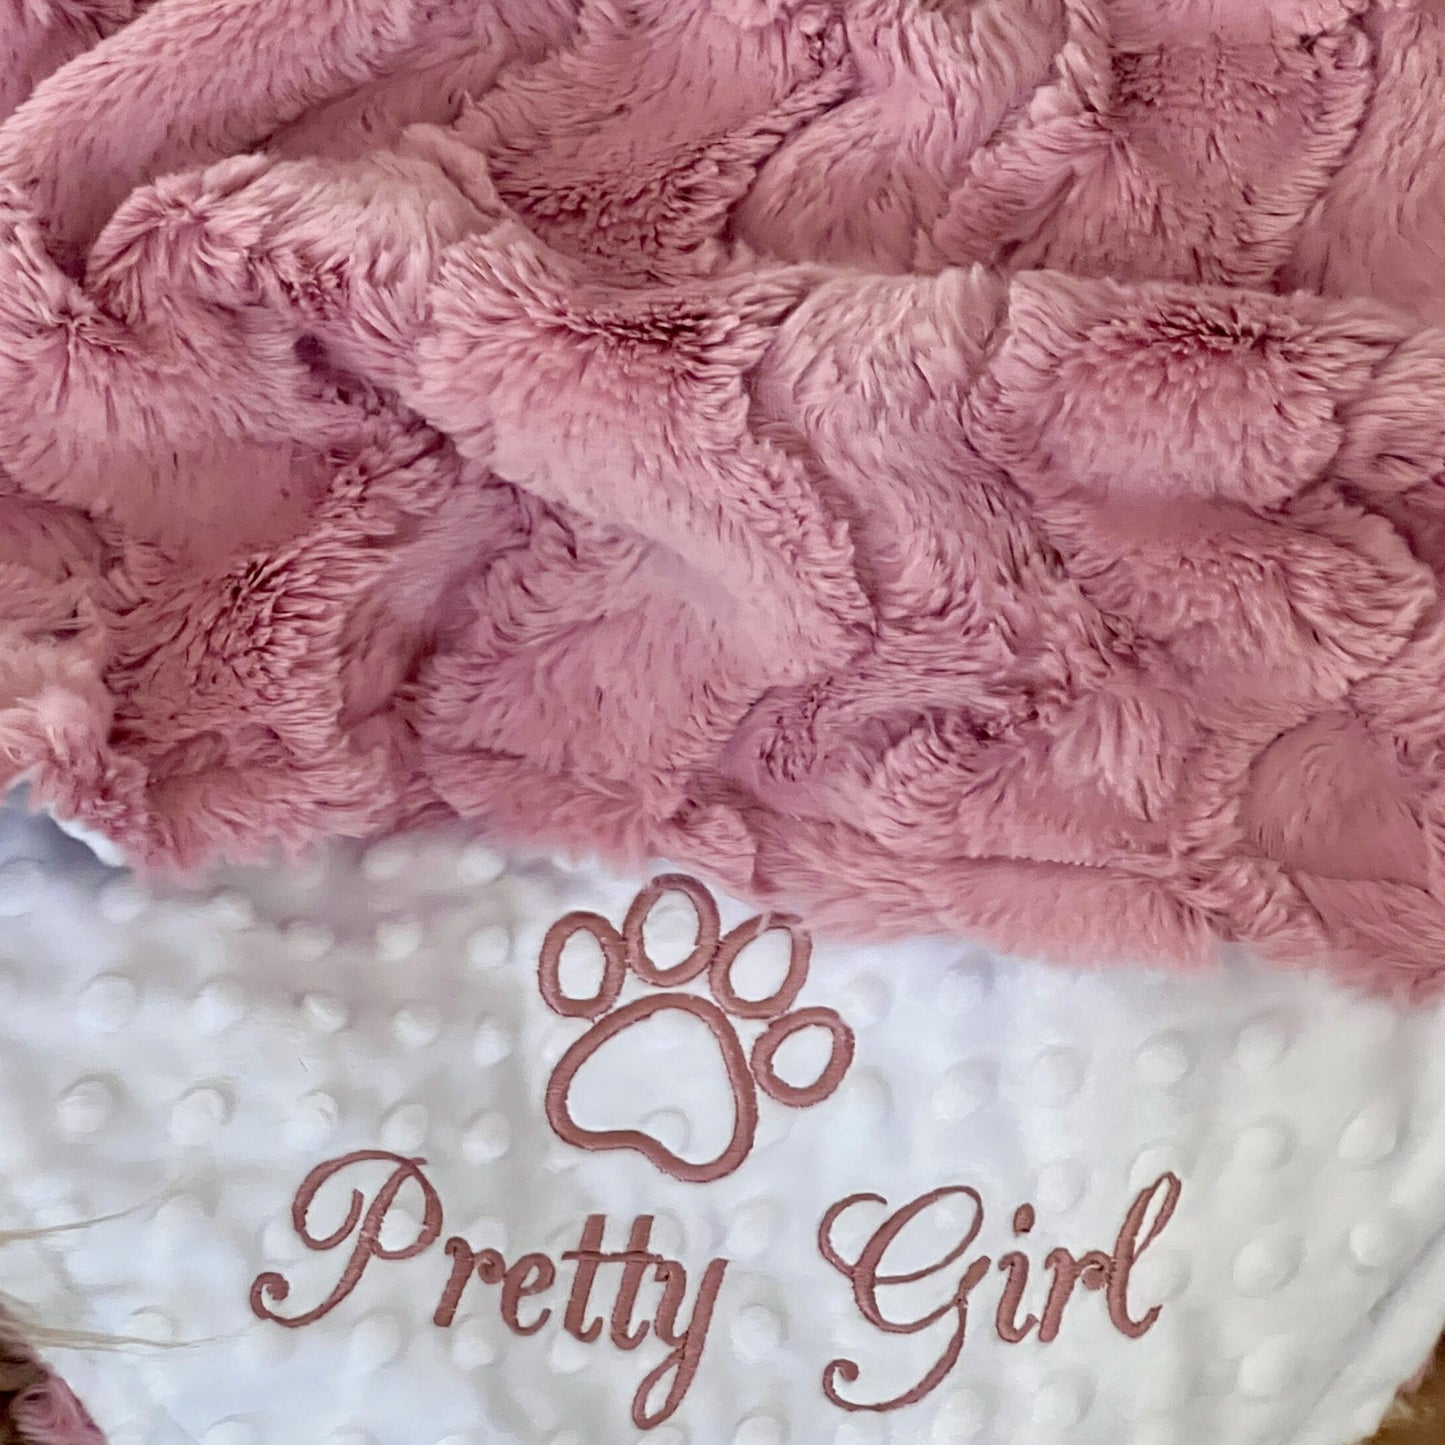 Woodrose Glacier Pink Minky Pet Blanket - Personalized